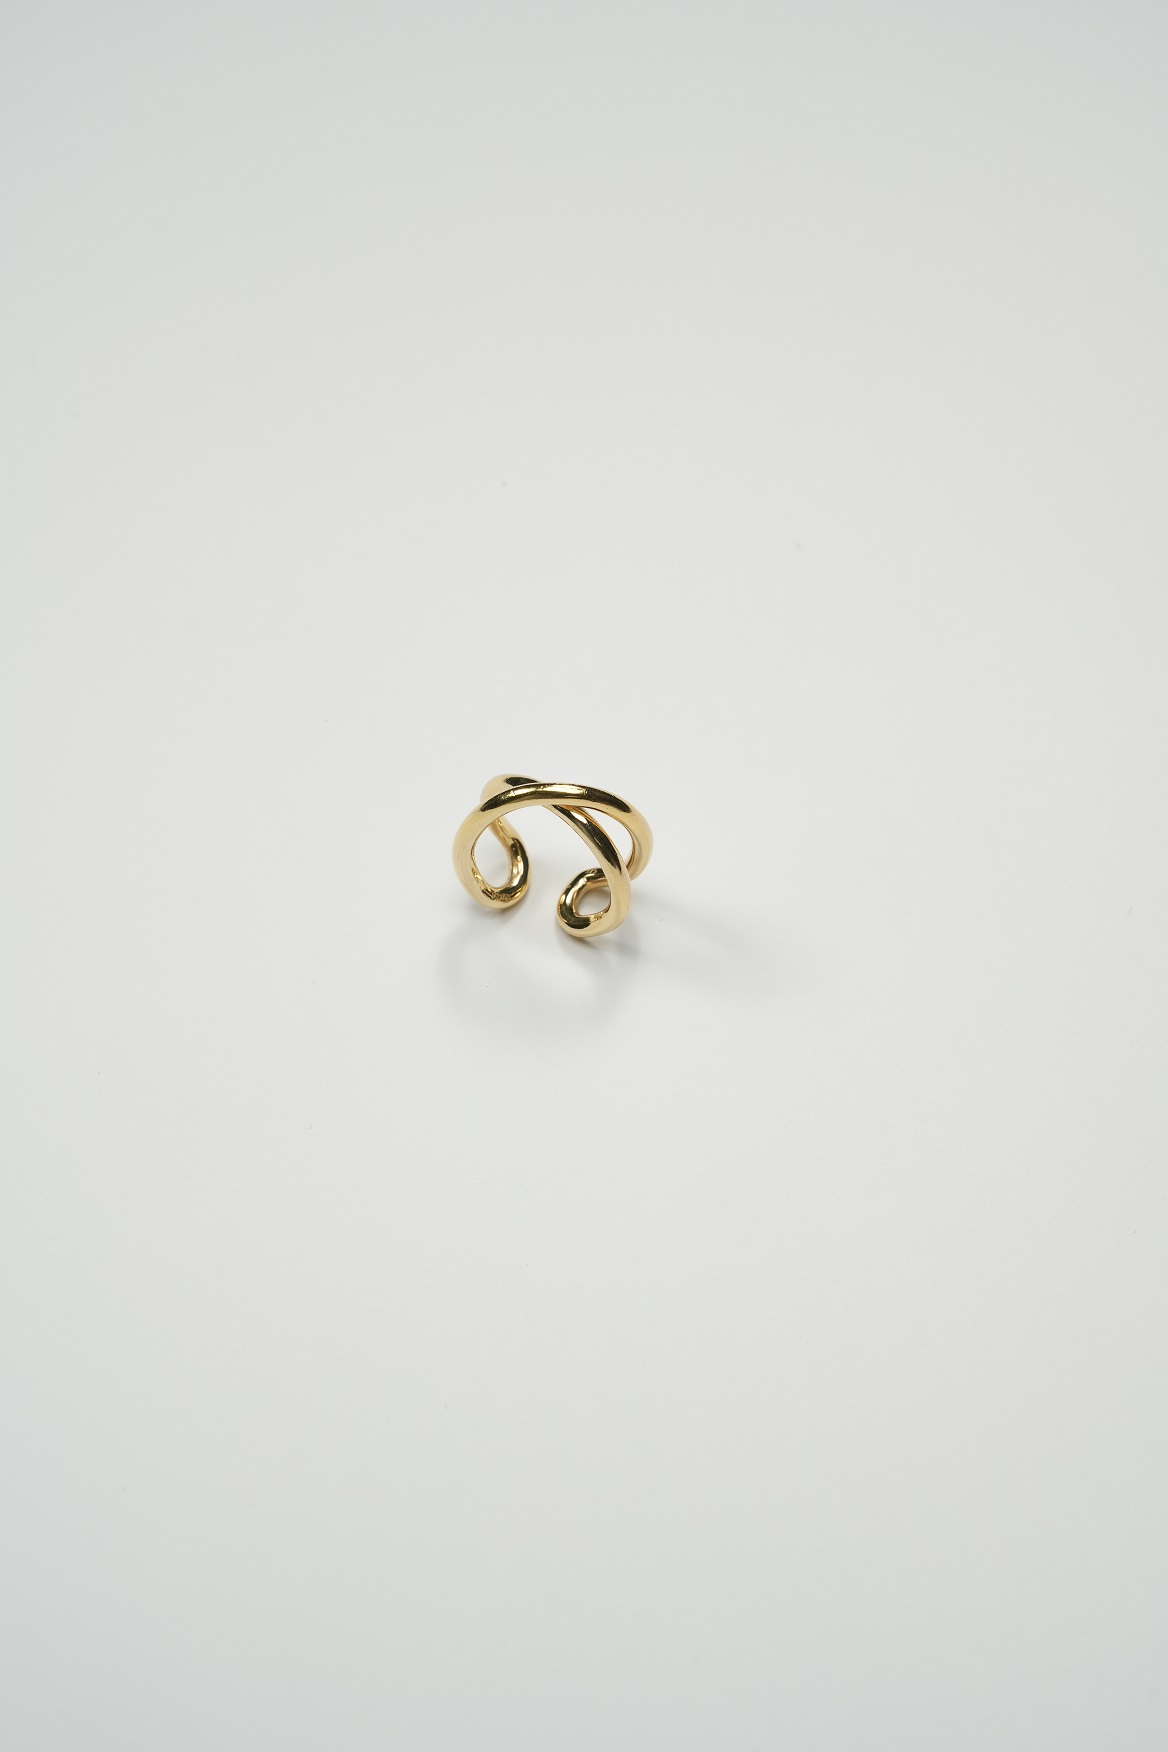 24K yellow gold vermeil ring/earcuff in 925 silver